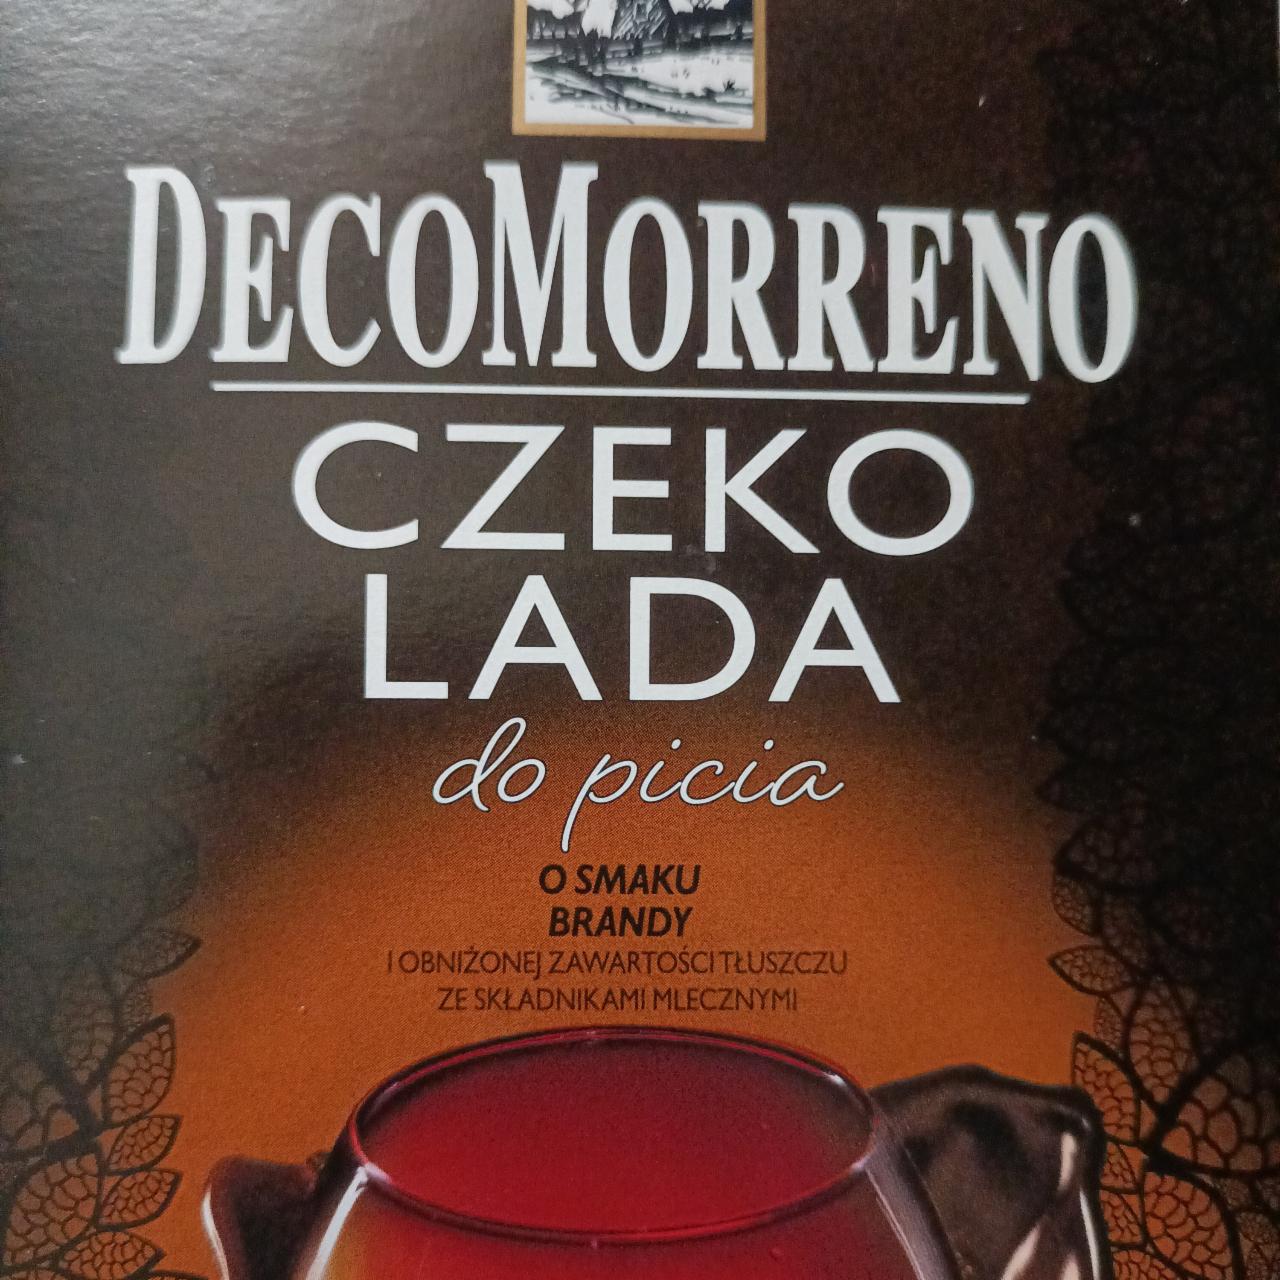 Zdjęcia - czekolada do picia o smaku brandy DecoMorreno